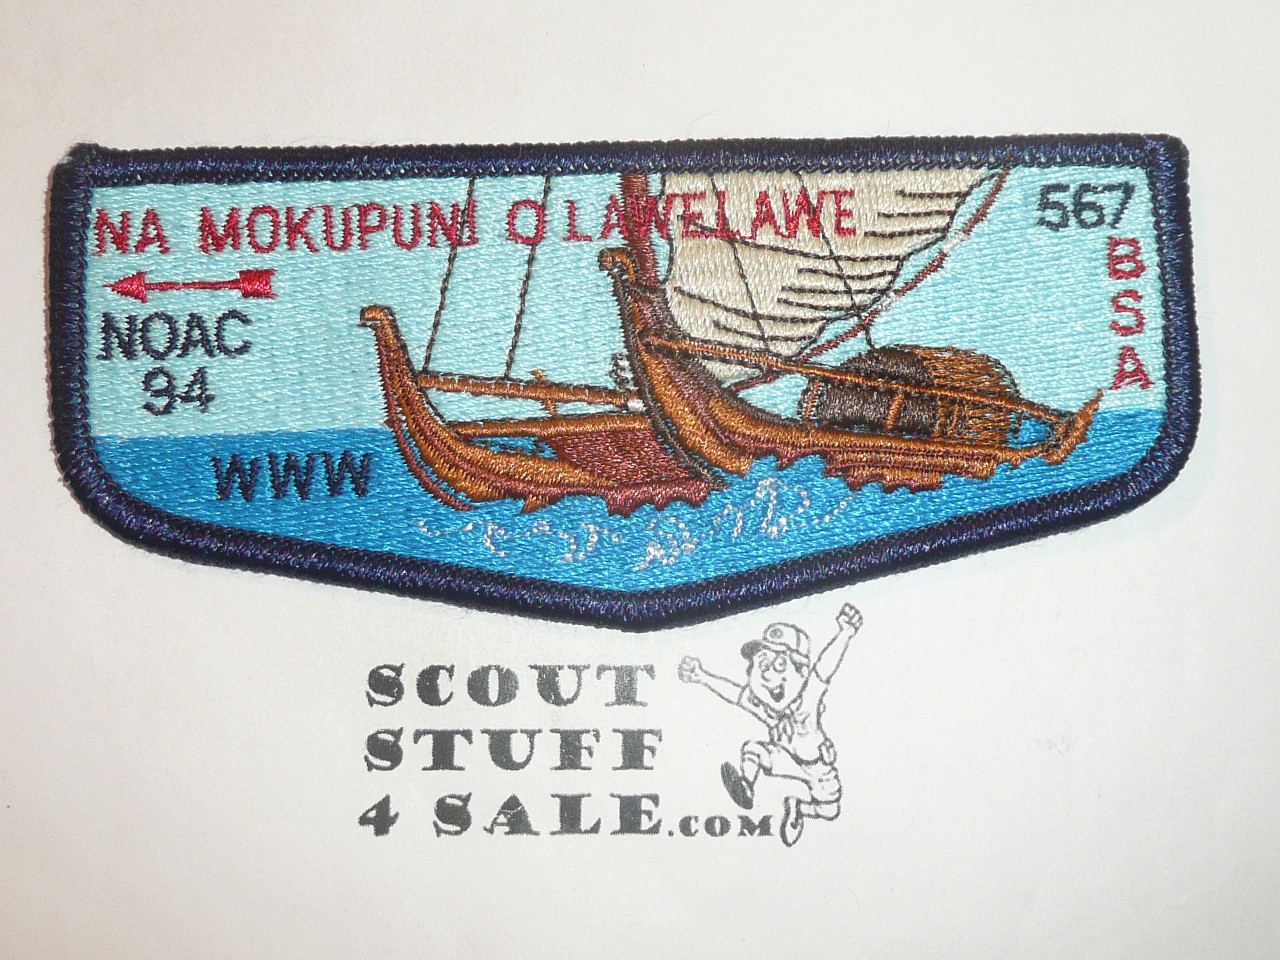 Order of the Arrow Lodge #567 NaMokupuni OLawelawe s21 1994 NOAC Flap Patch - Boy Scout